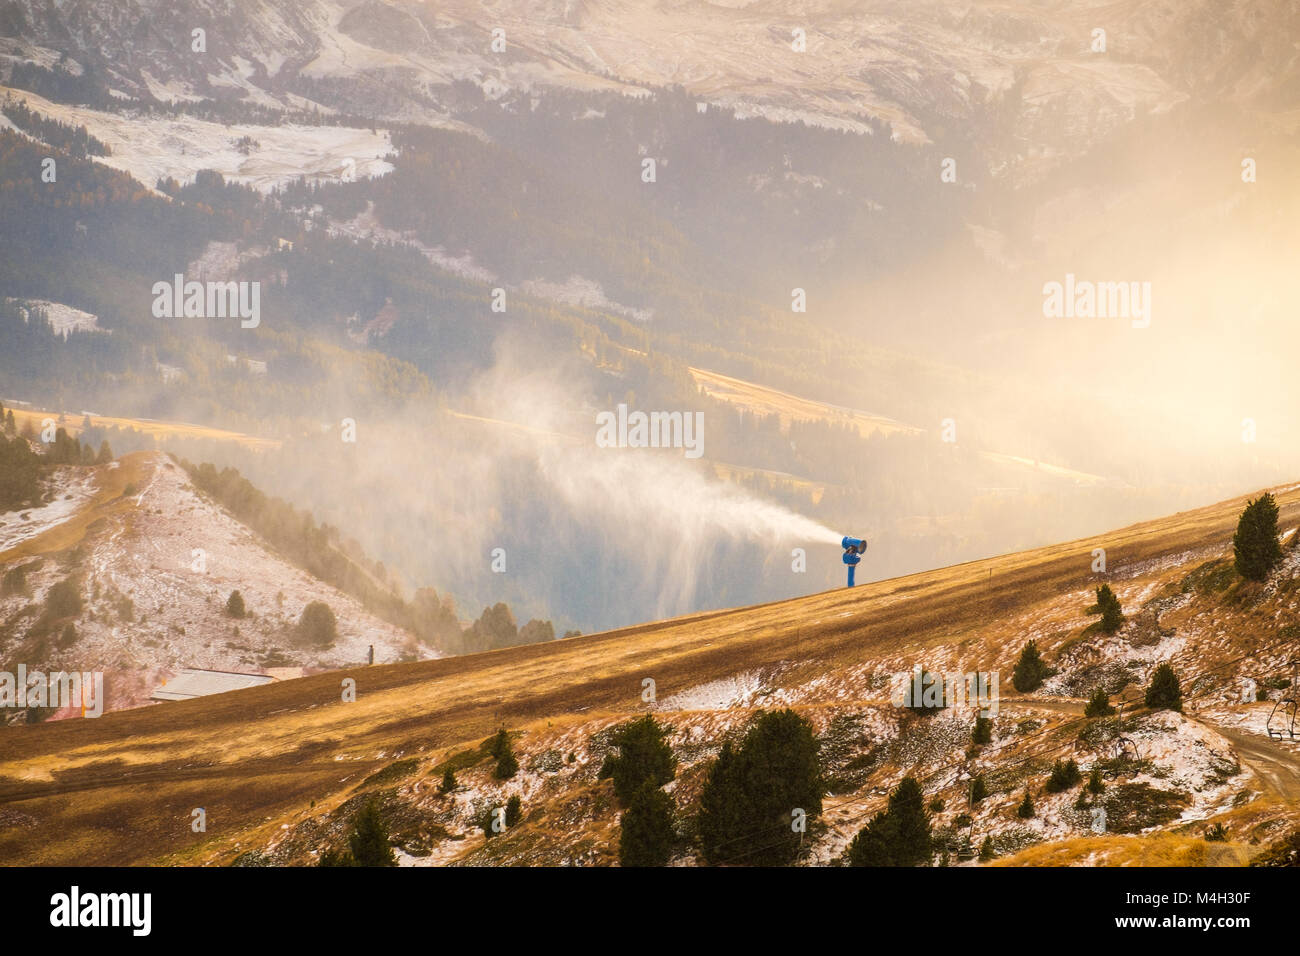 Schneekanone in den Dolomiten Alpen in der Nähe der Seceda Peak, Dolomiti. Südtirol, Italien Stockfoto